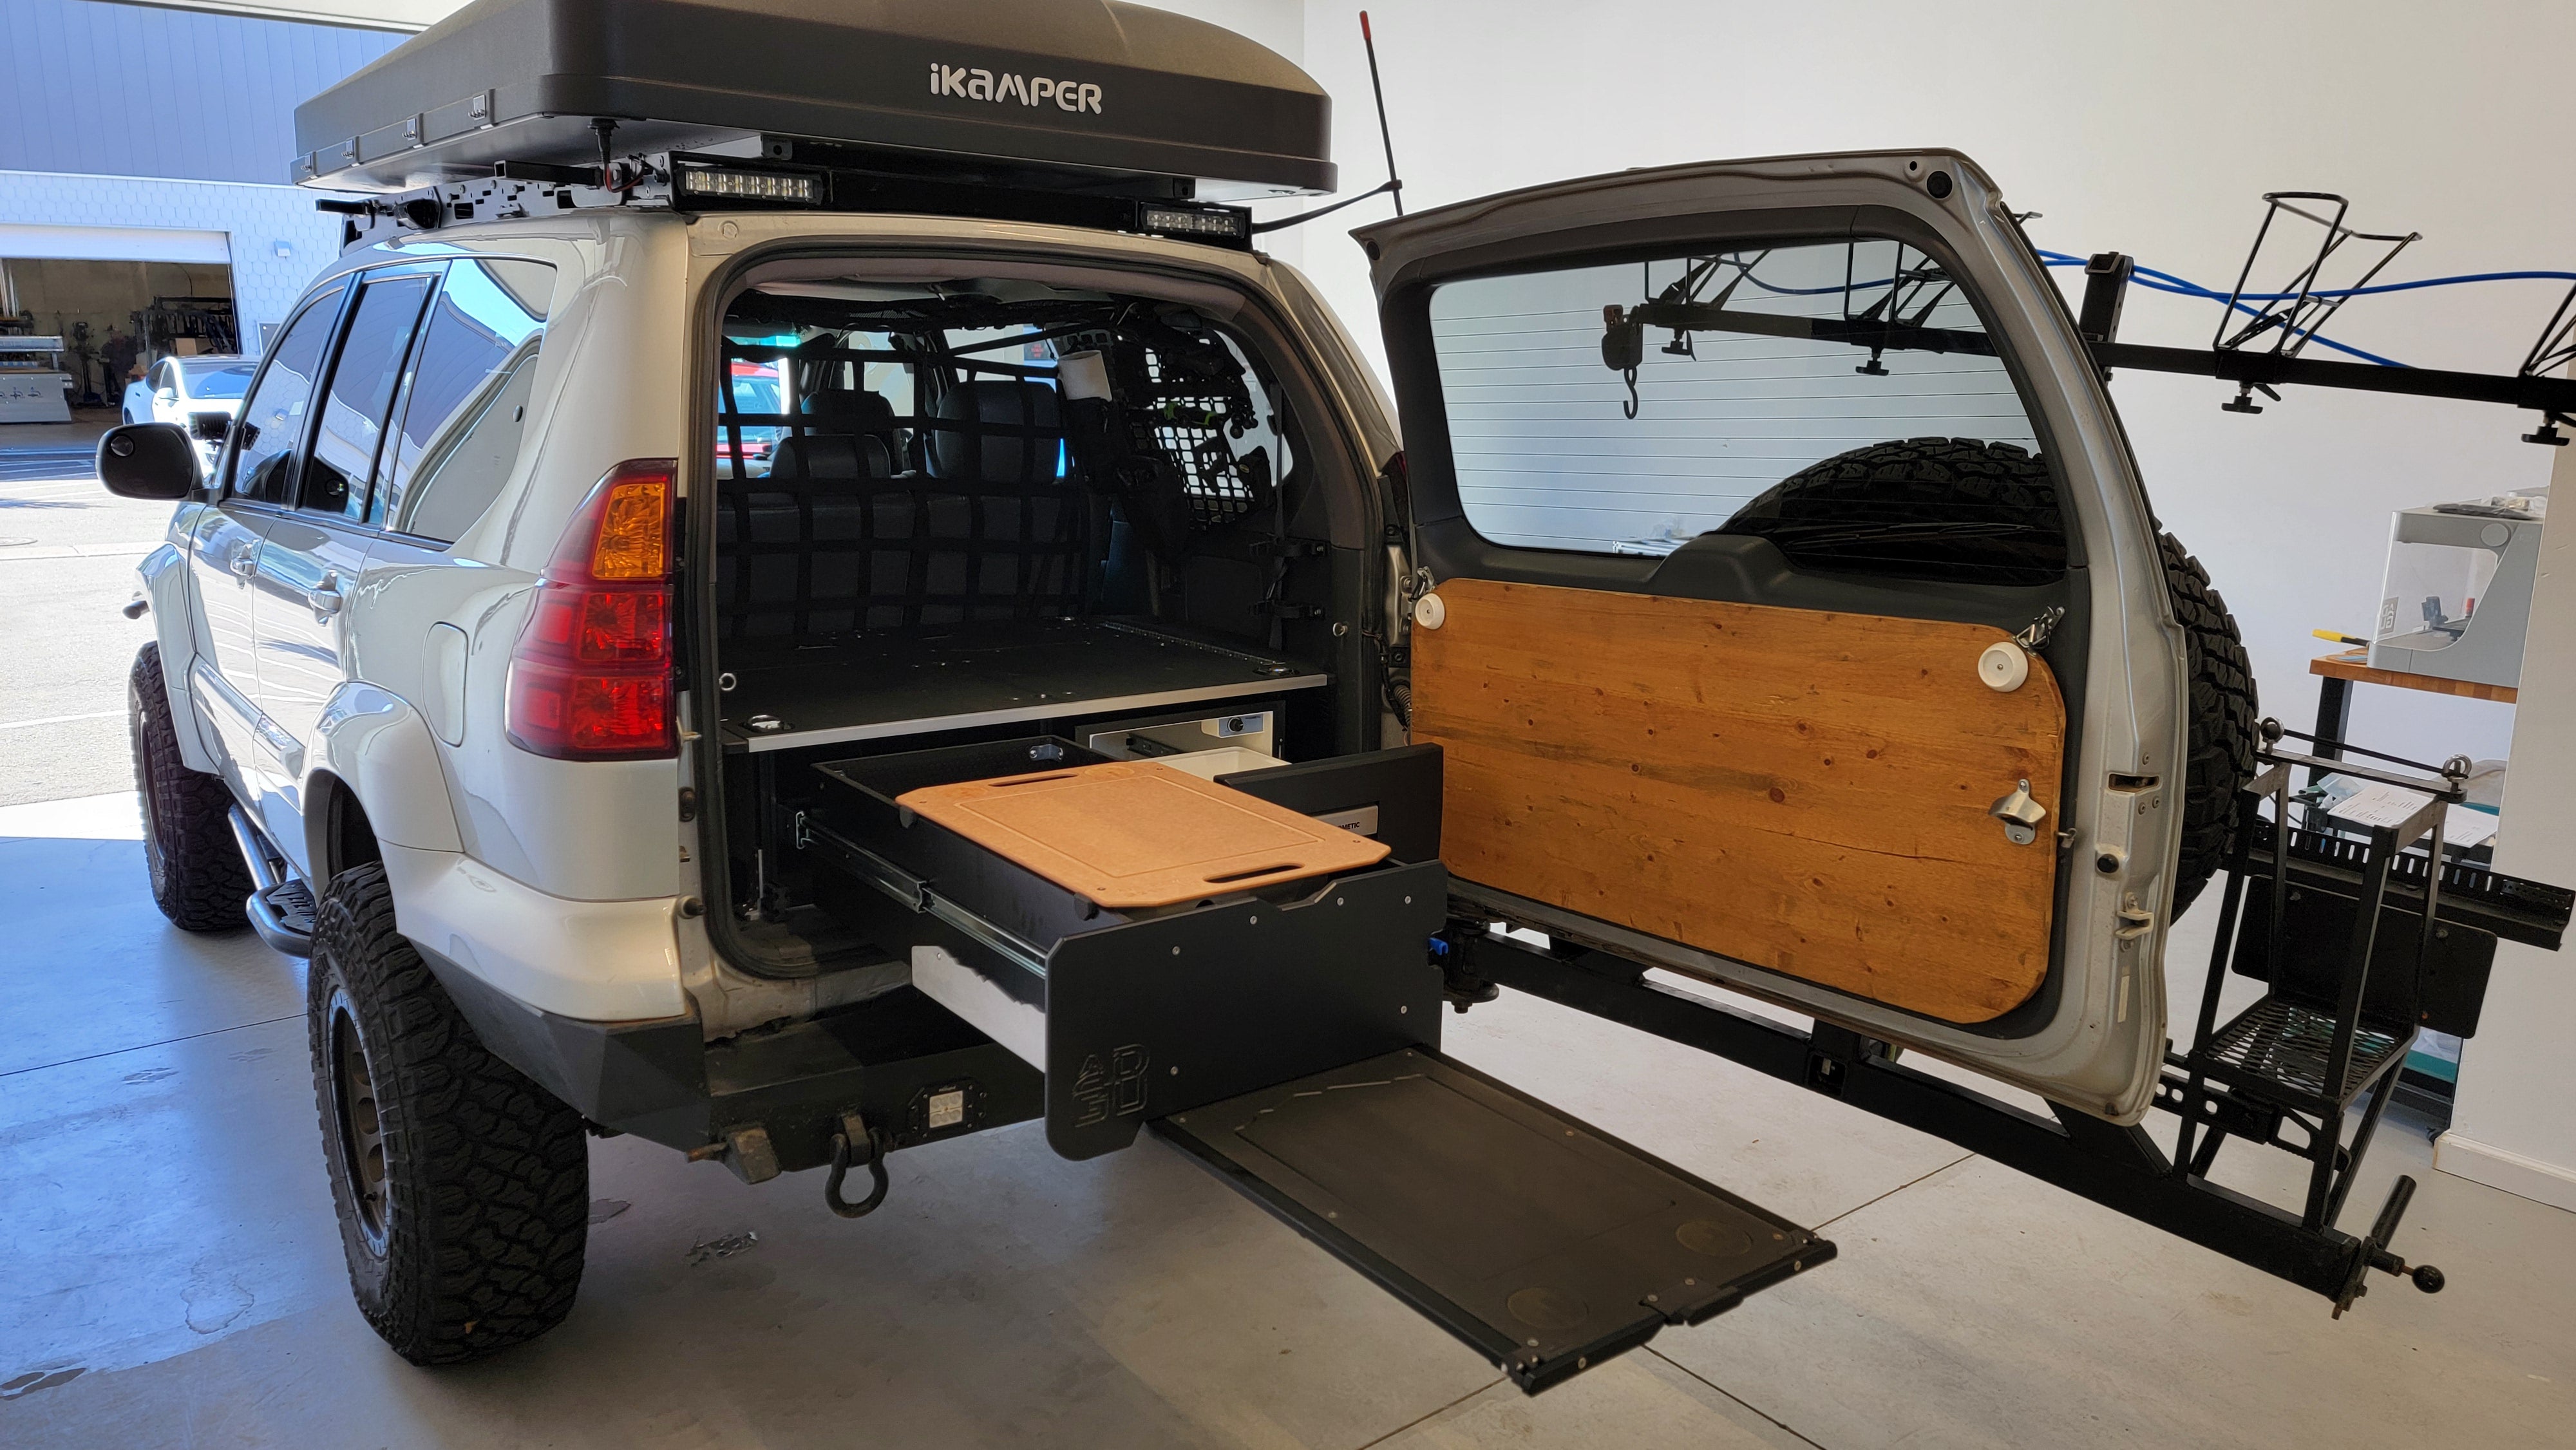 GX470 drawer storage  system with  fridge and sleeping platform for vehicle organization